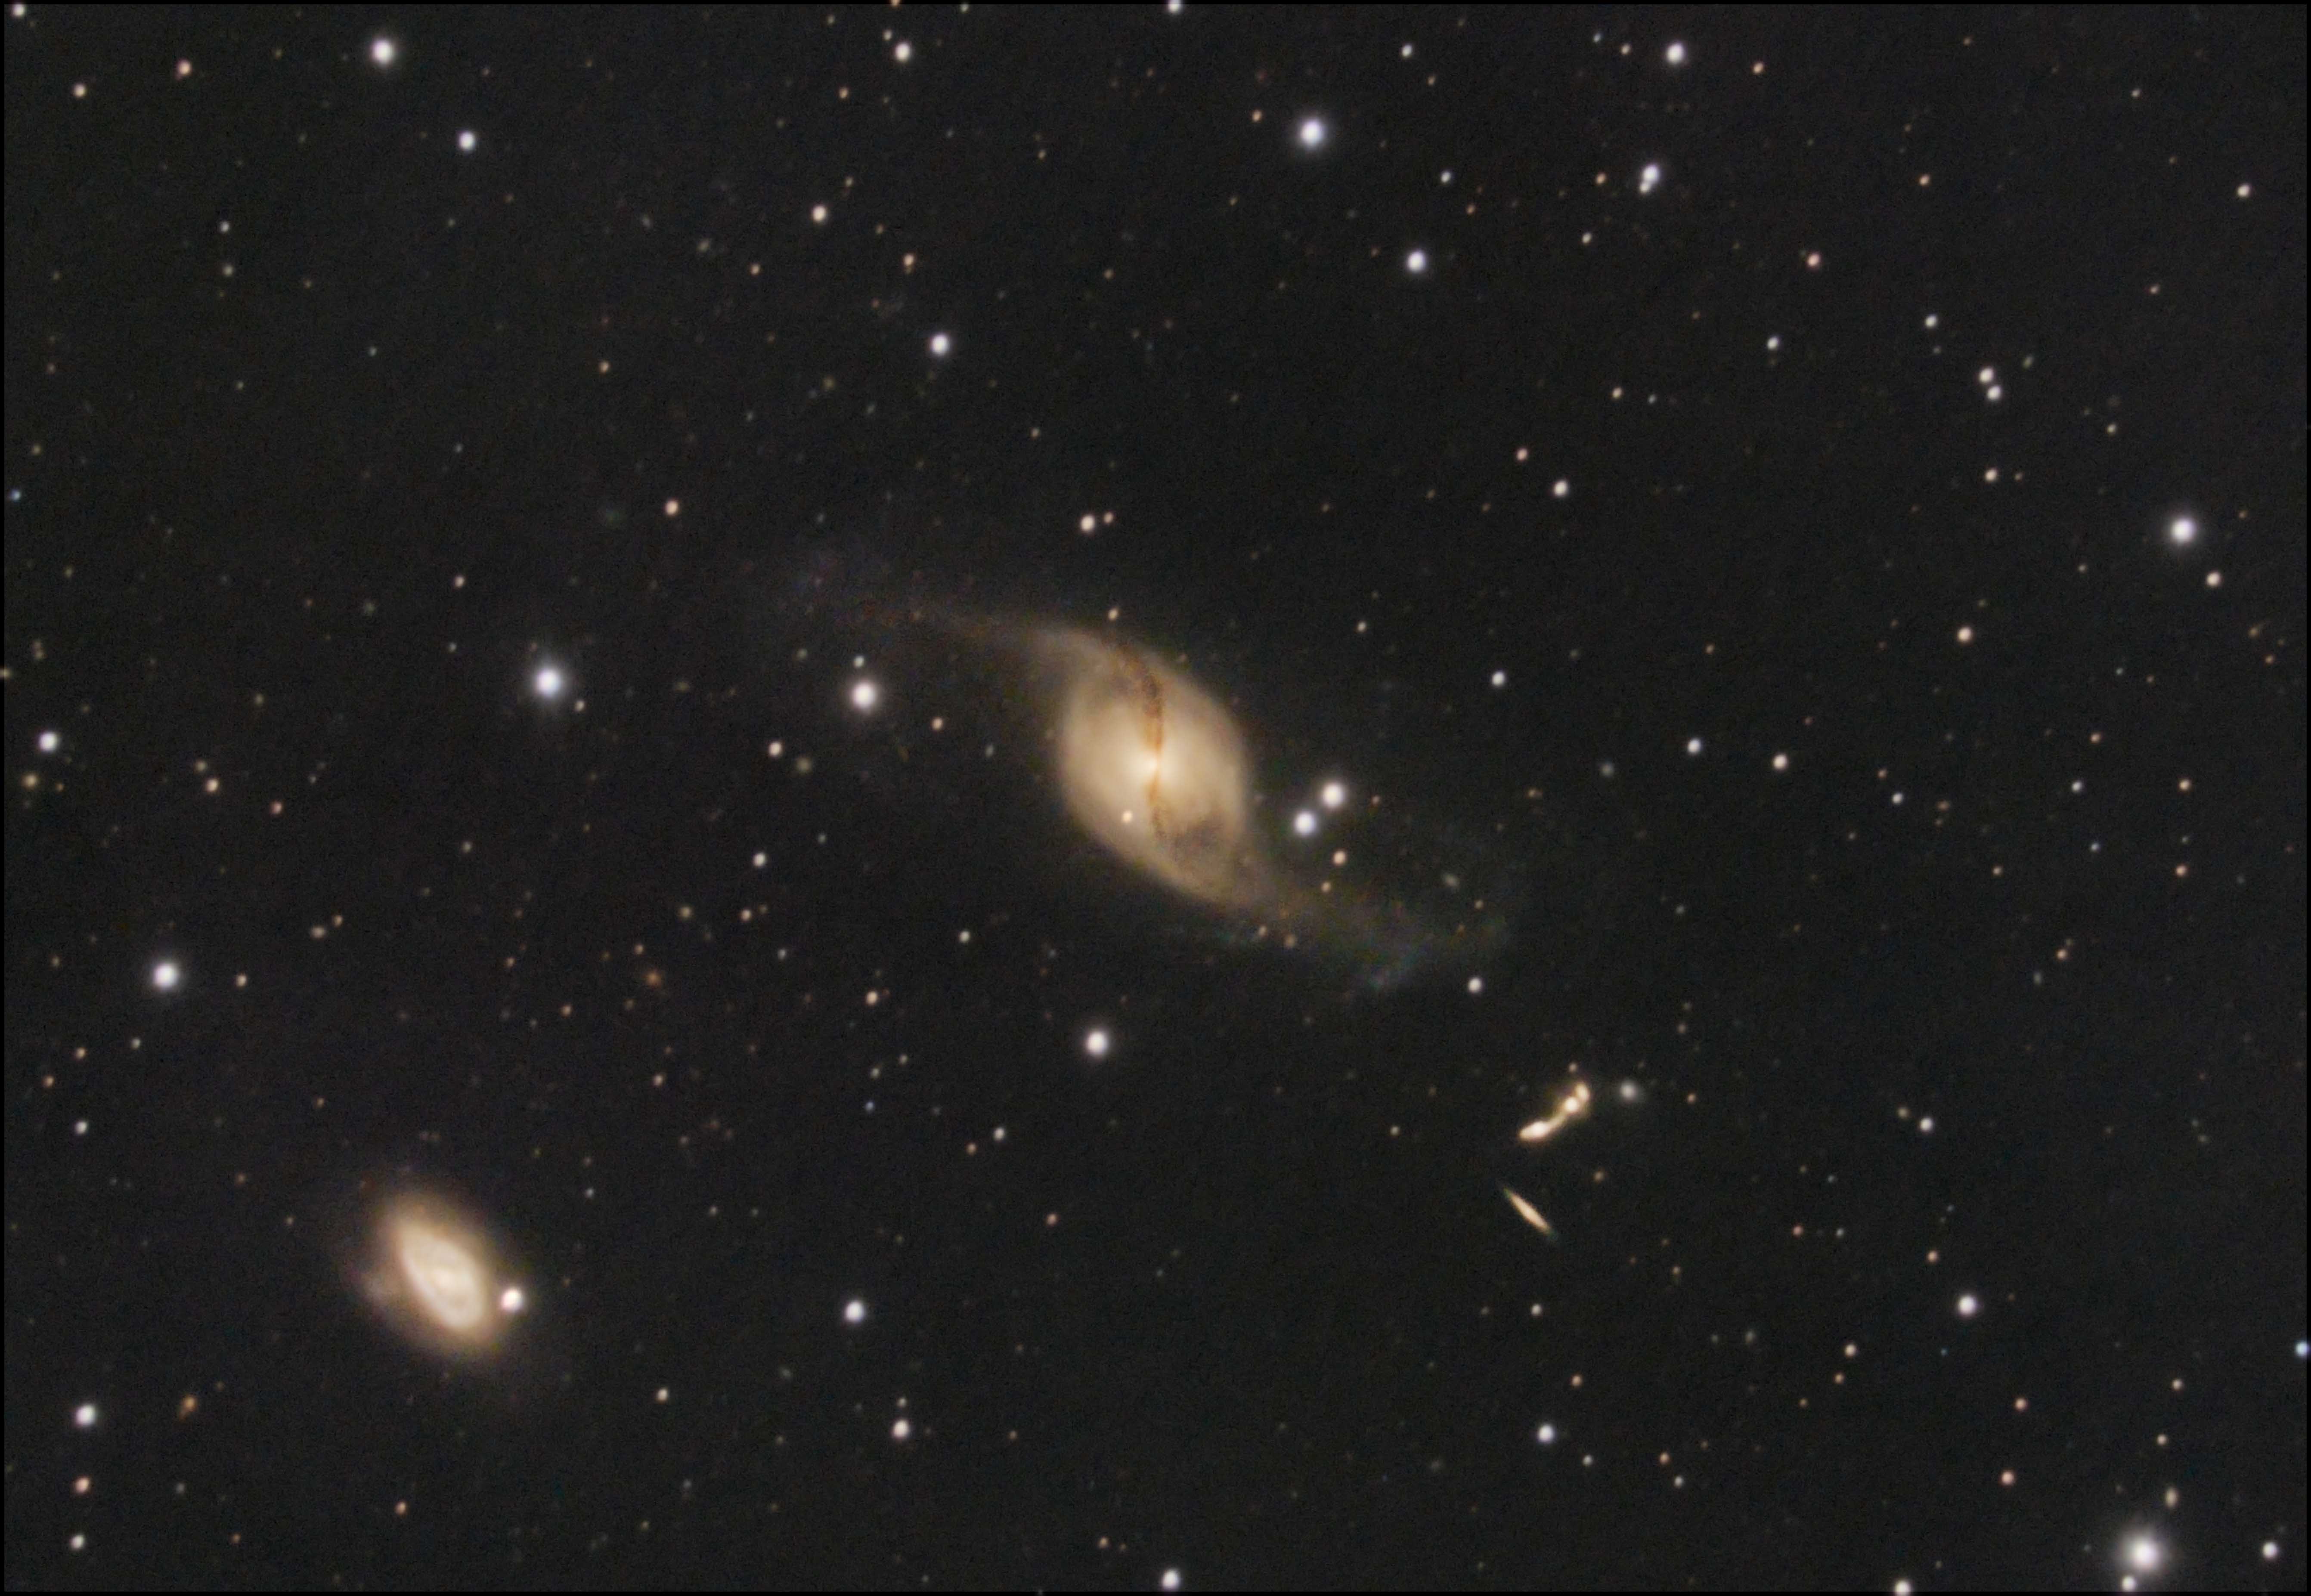 image result_drizzle_7020sLLV06MINI.jpg (0.7MB)
Lien vers: https://fr.wikipedia.org/wiki/NGC_3718